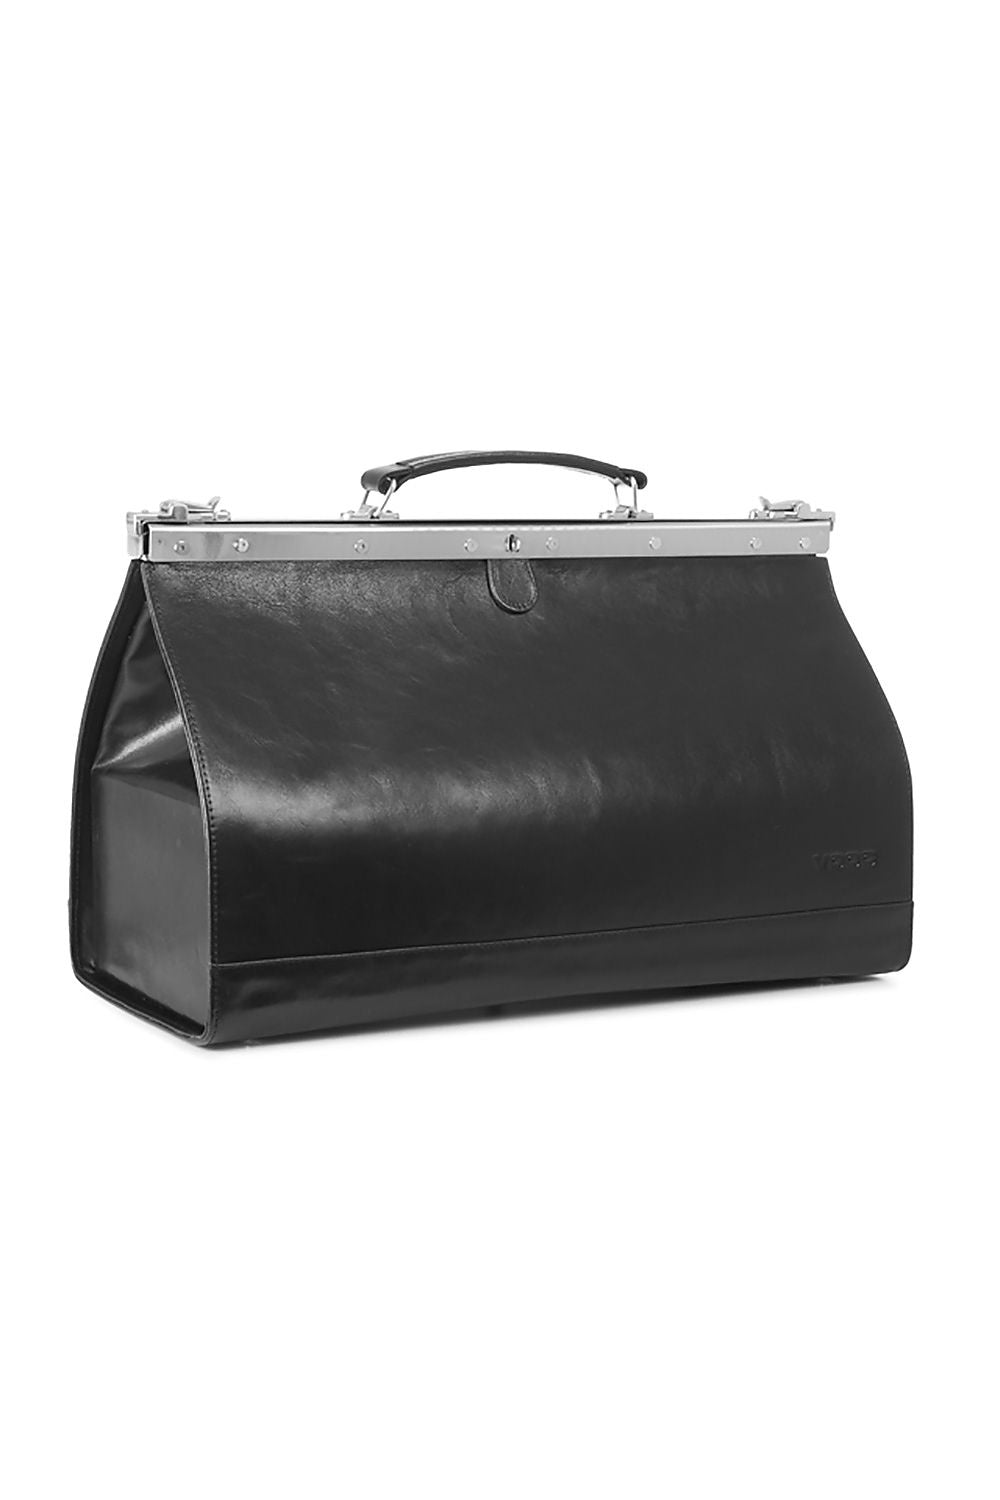 Natural Leather Bag Model 152104 Verosoft - LOLA LUXE